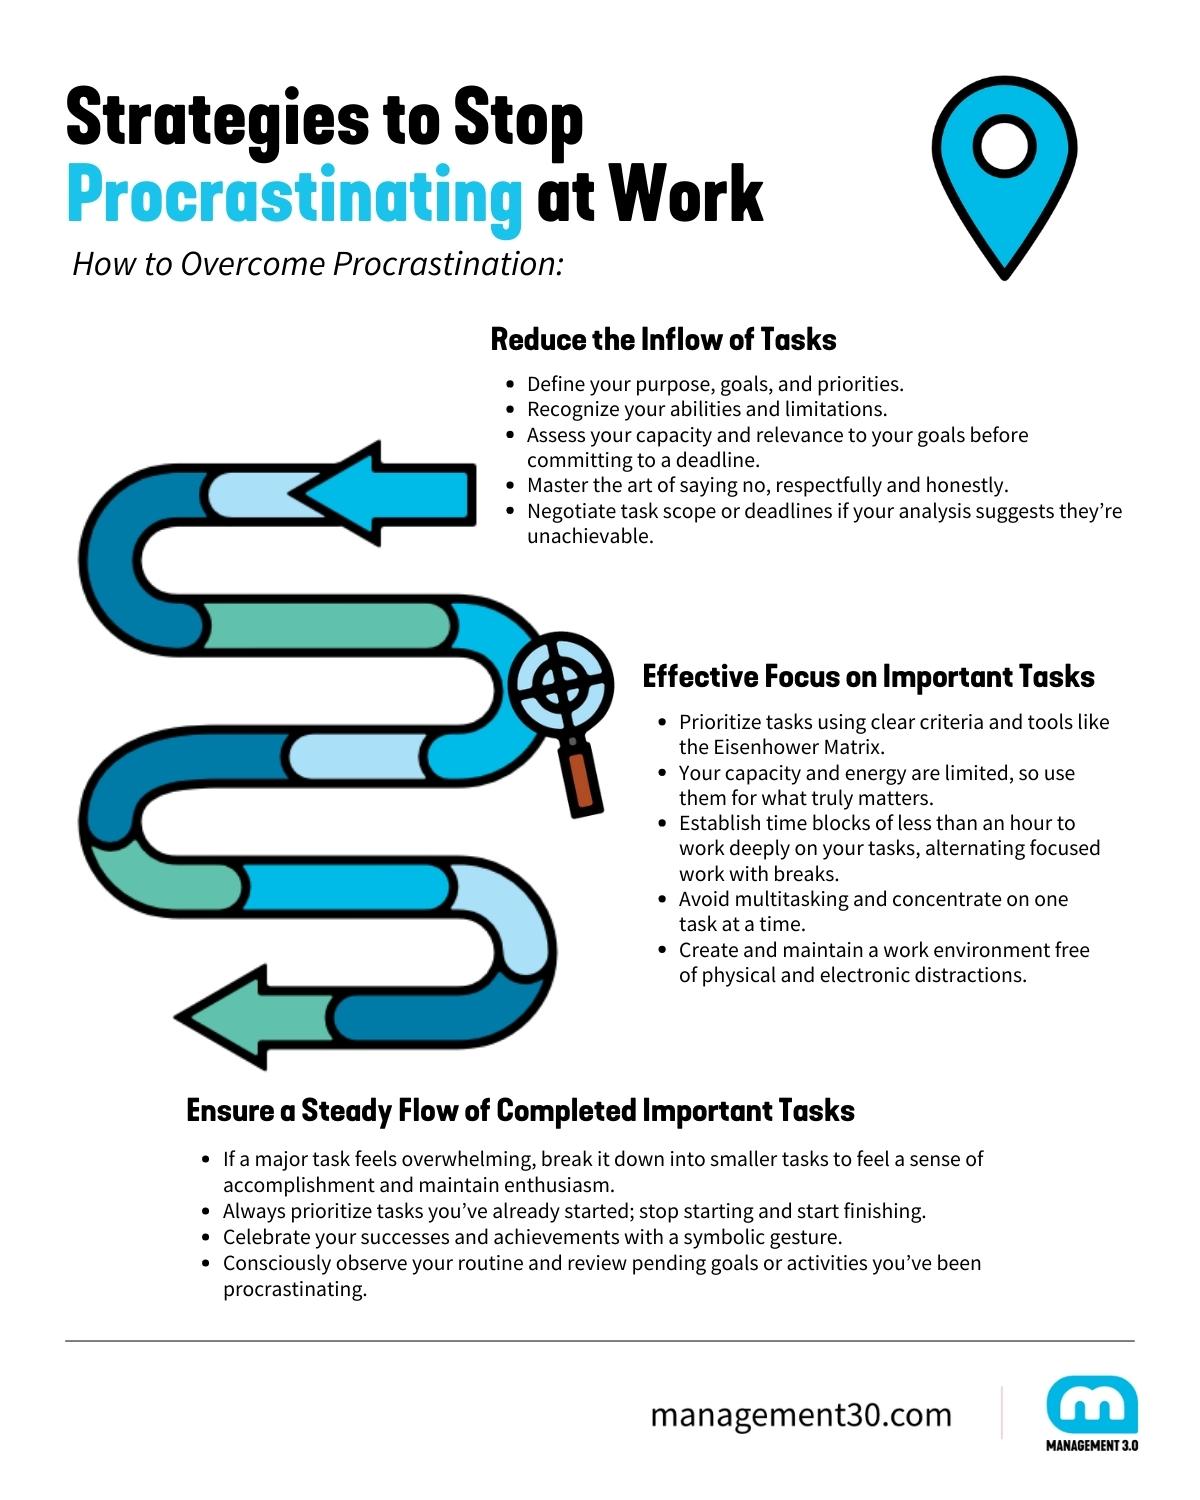 Strategies to Stop Procrastinating at Work